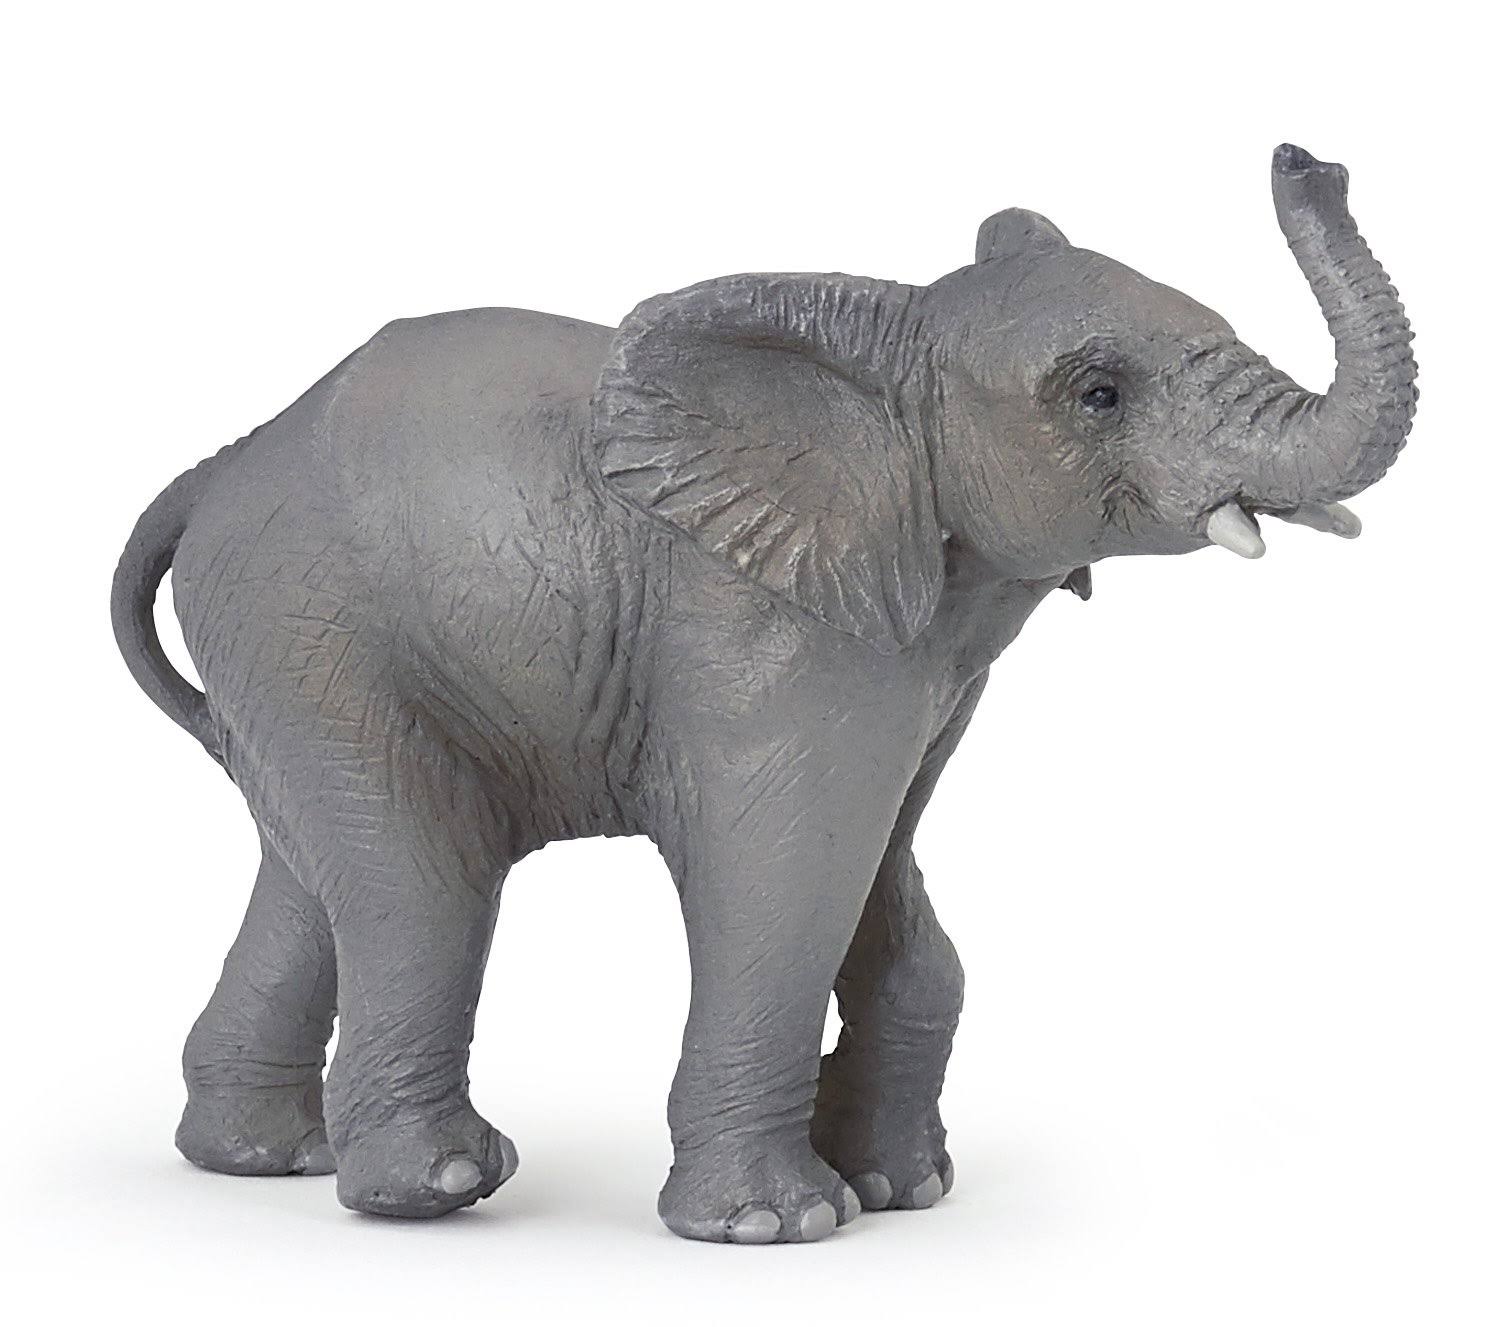 Papo 50225 Wild Animals Novelty 2017 Young Elephant Figurine - 3 1/2"